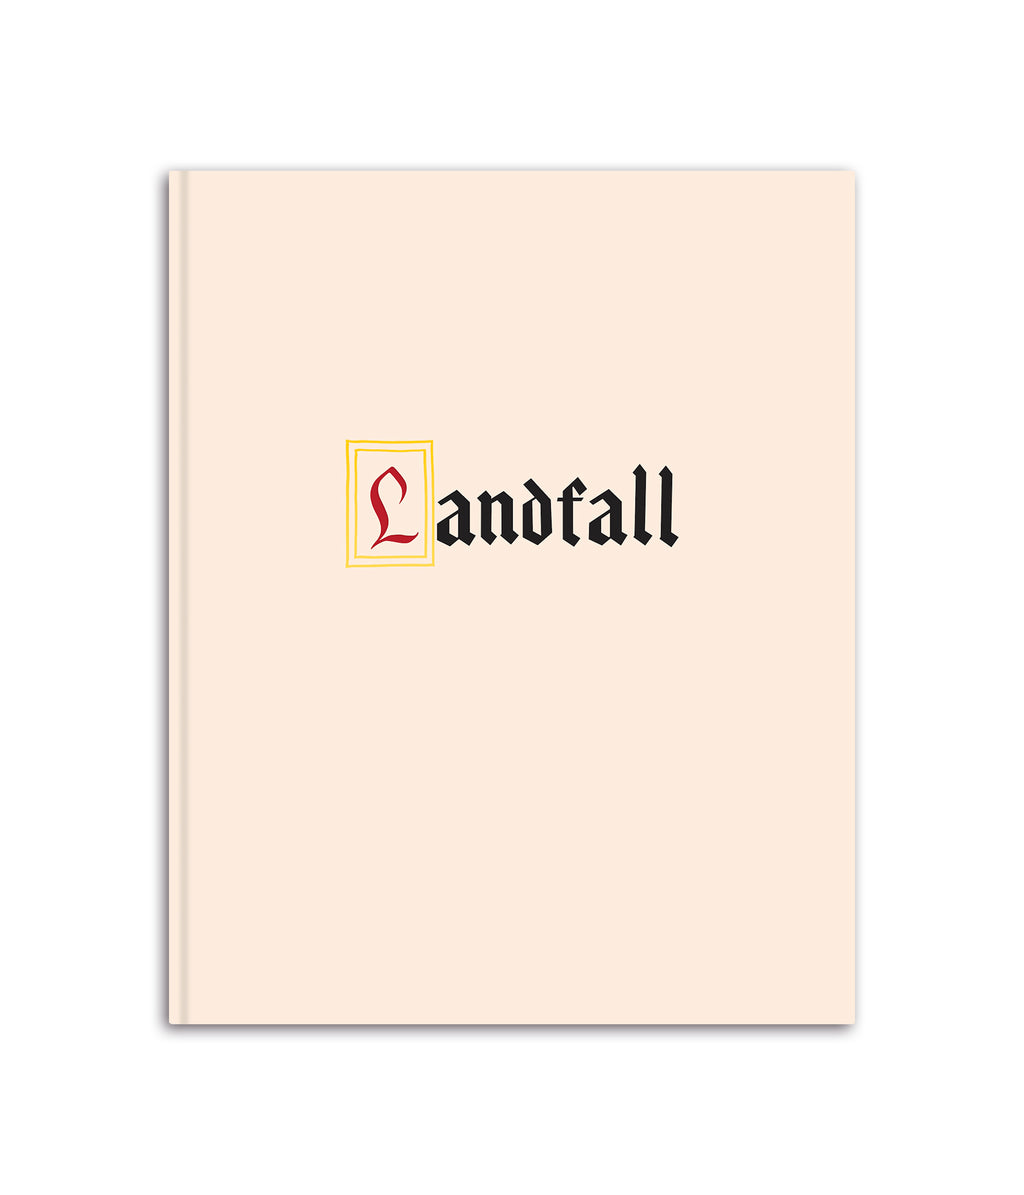 Landfall - First Edition